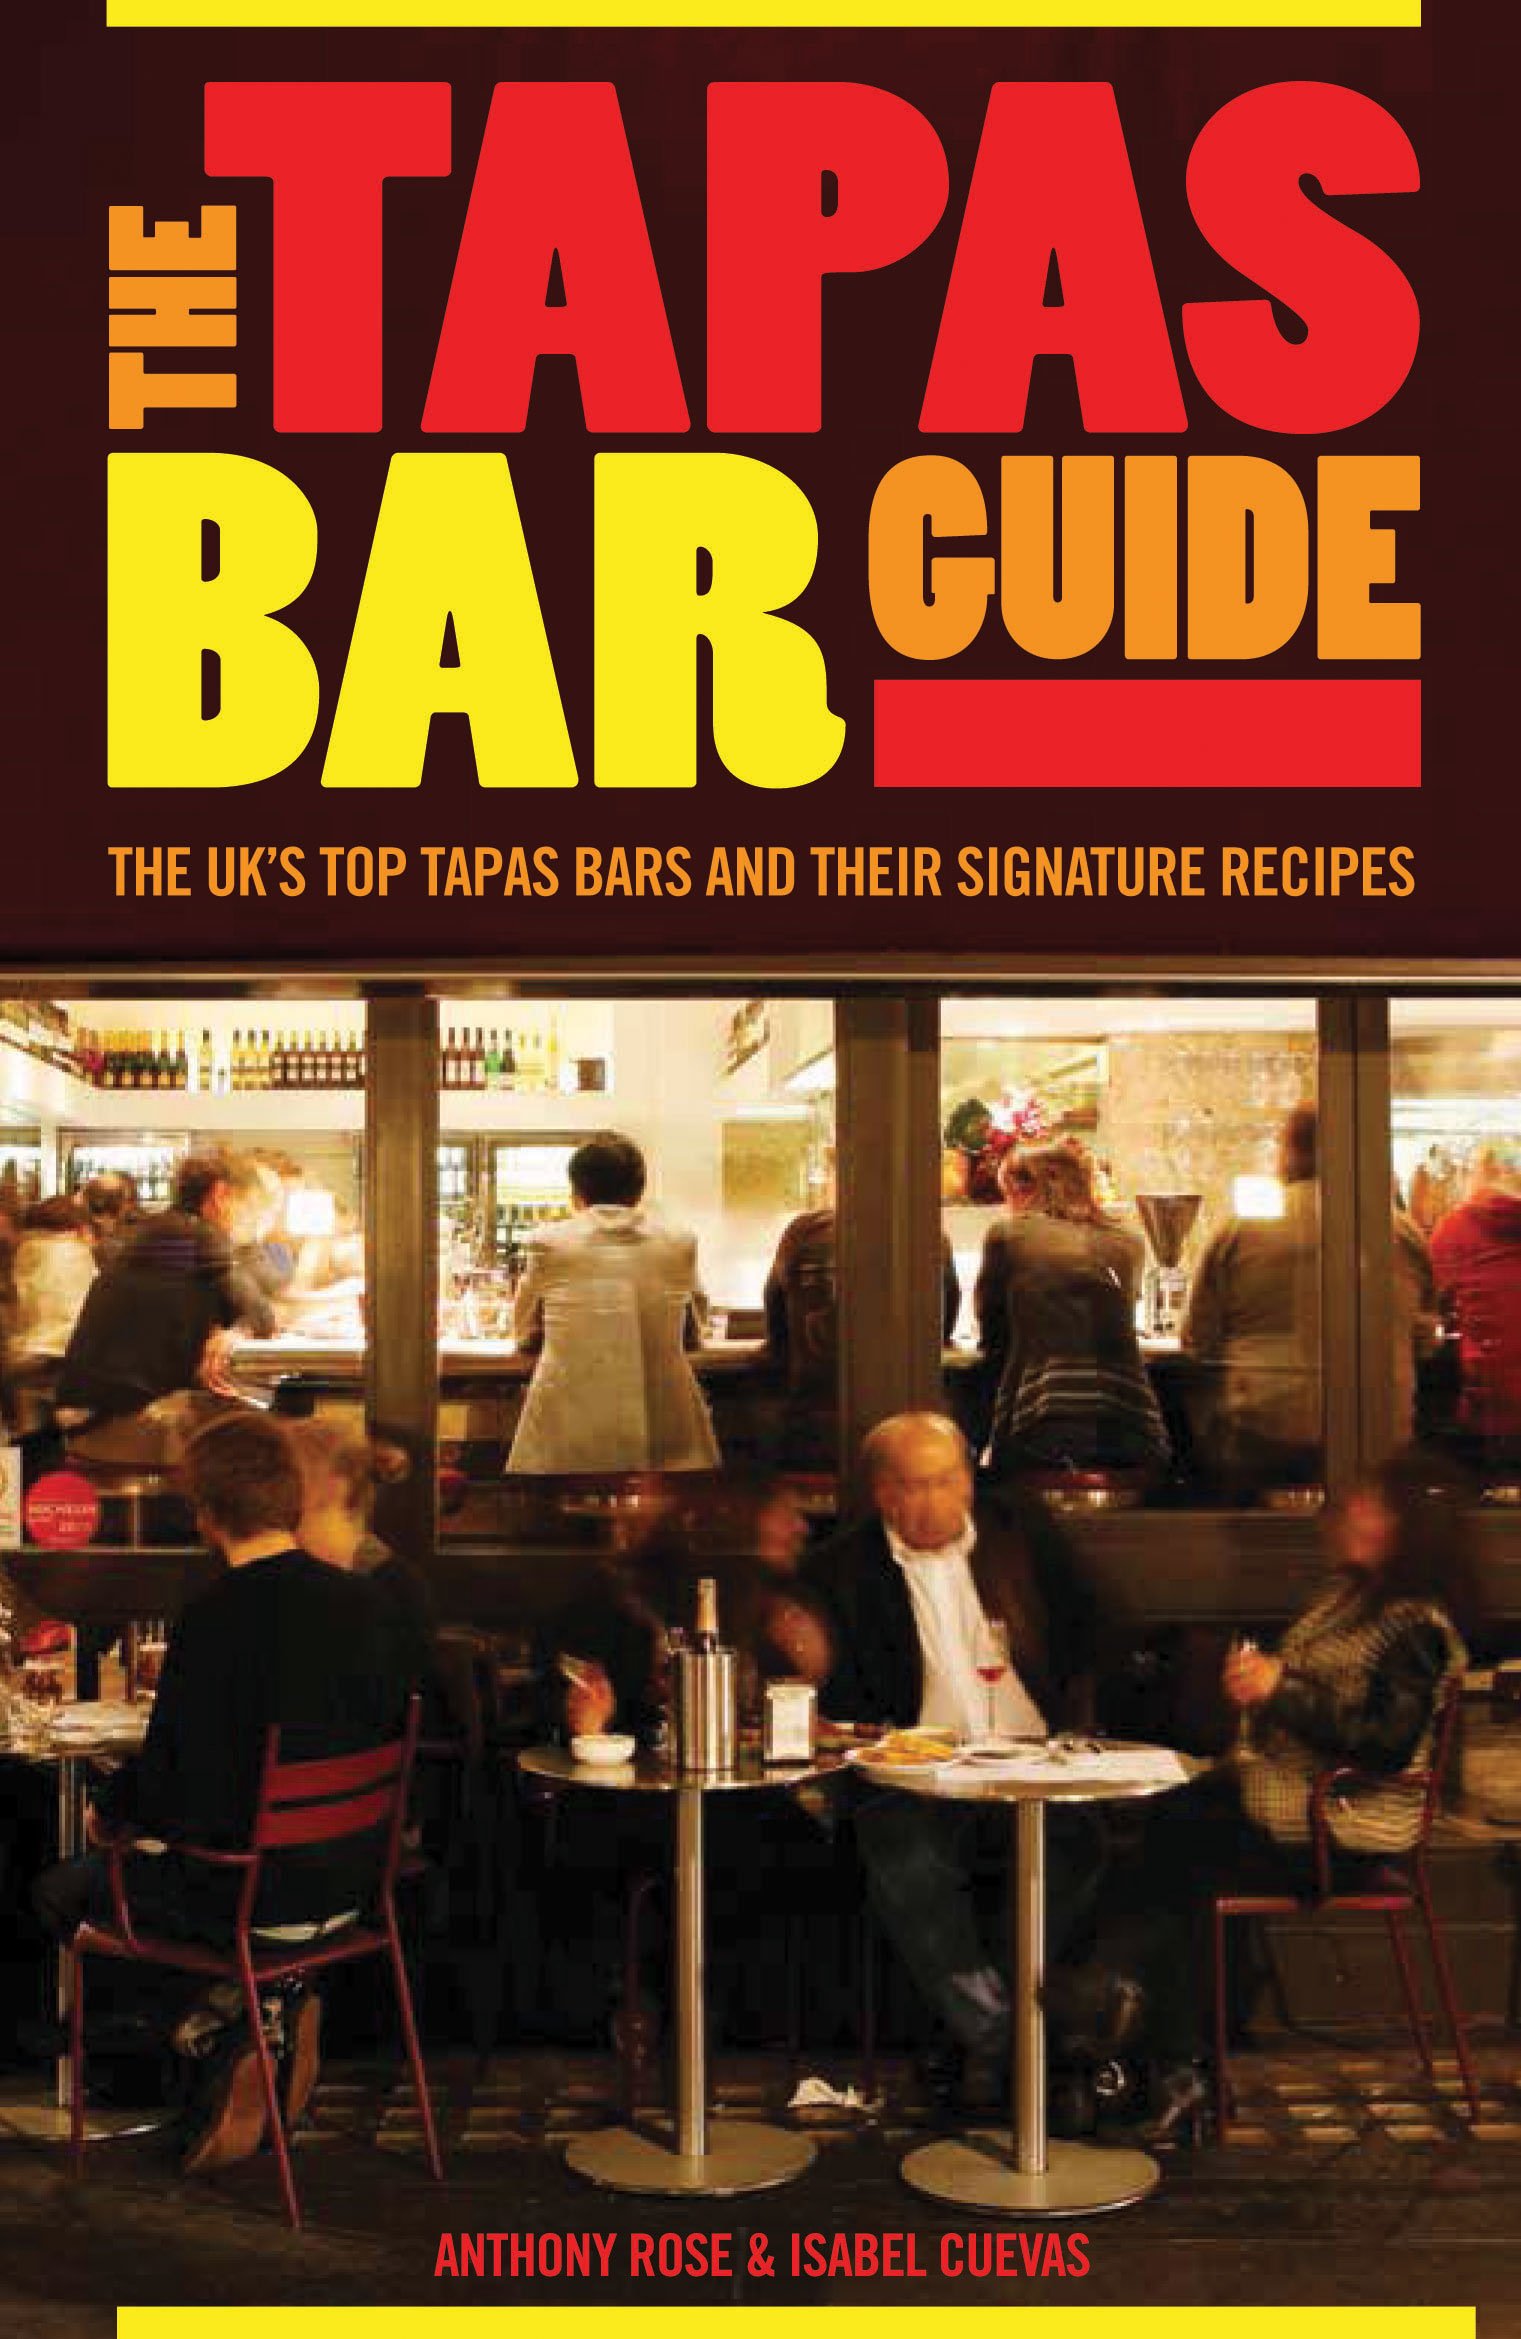 Tapas Bar Guide